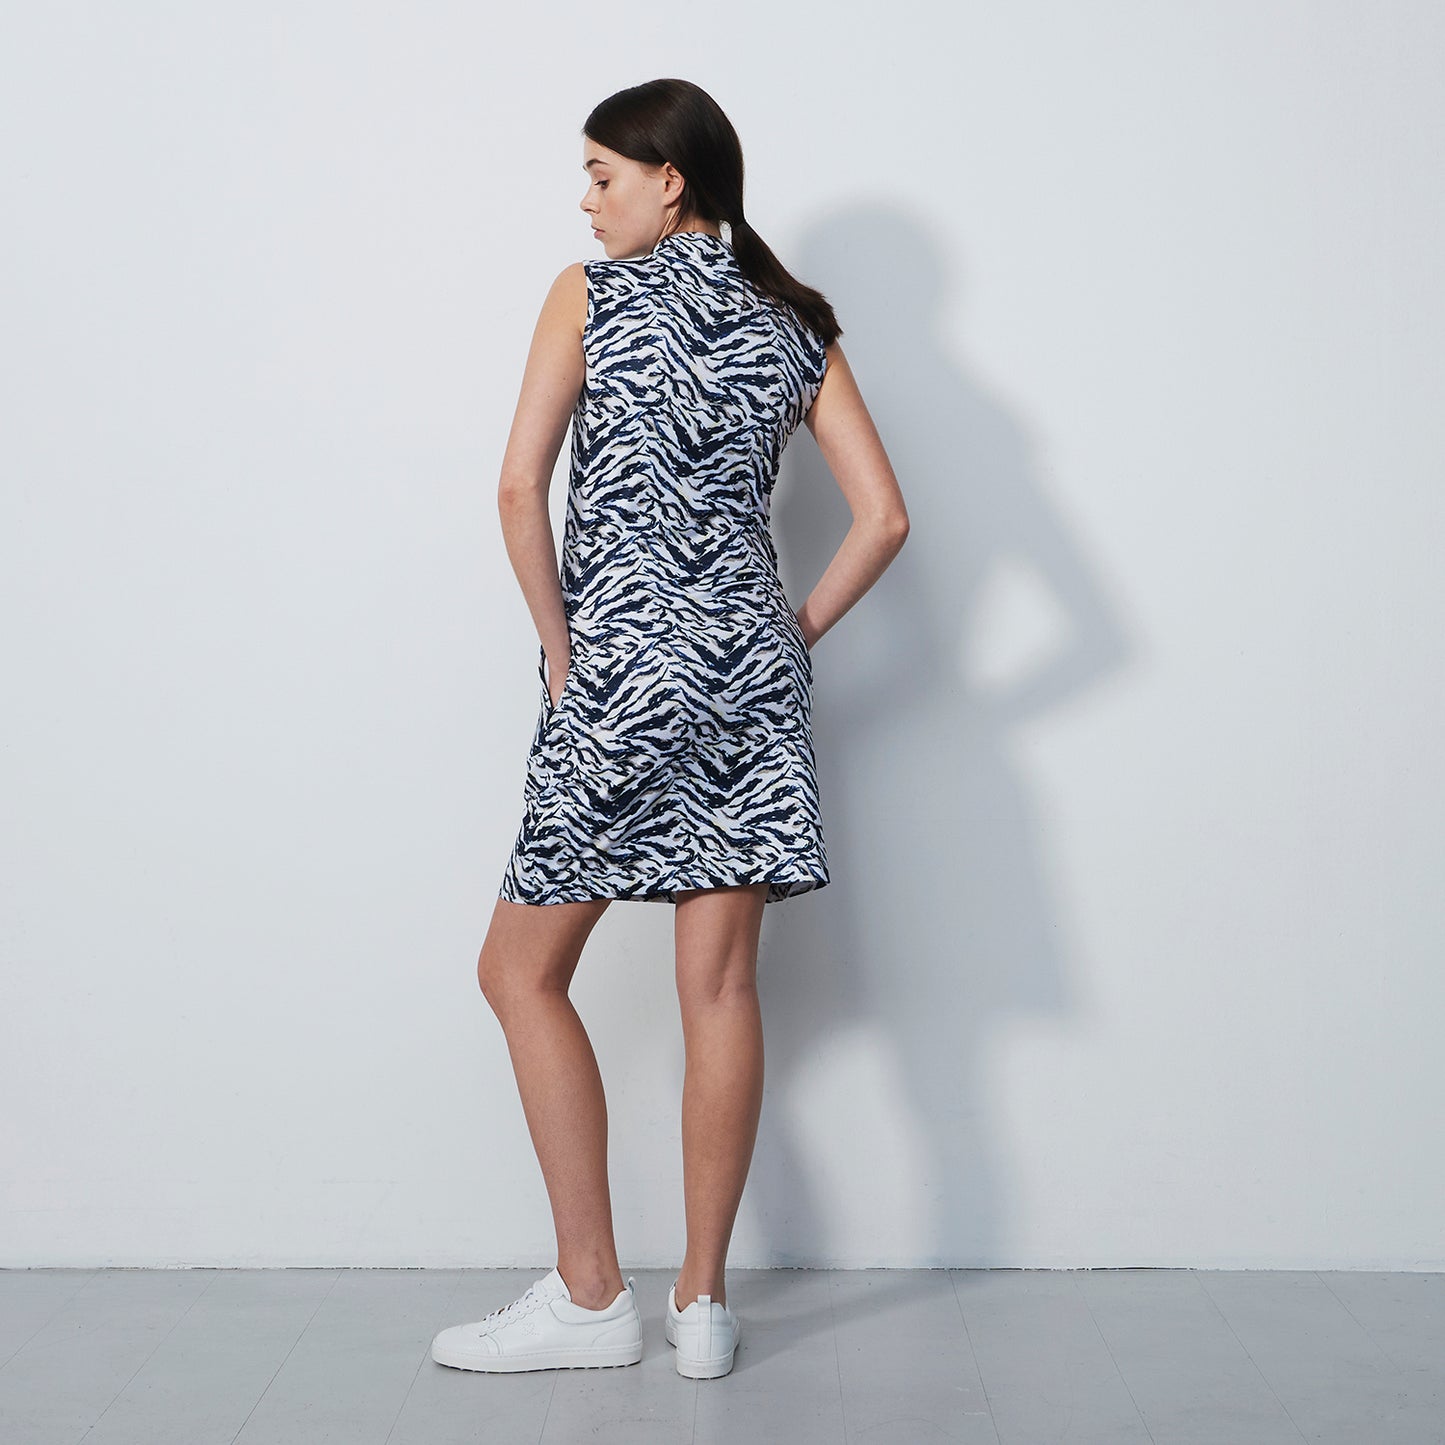 Daily Sports Ladies Sleeveless Animal Print Dress in Streamline Art - Large Only Left